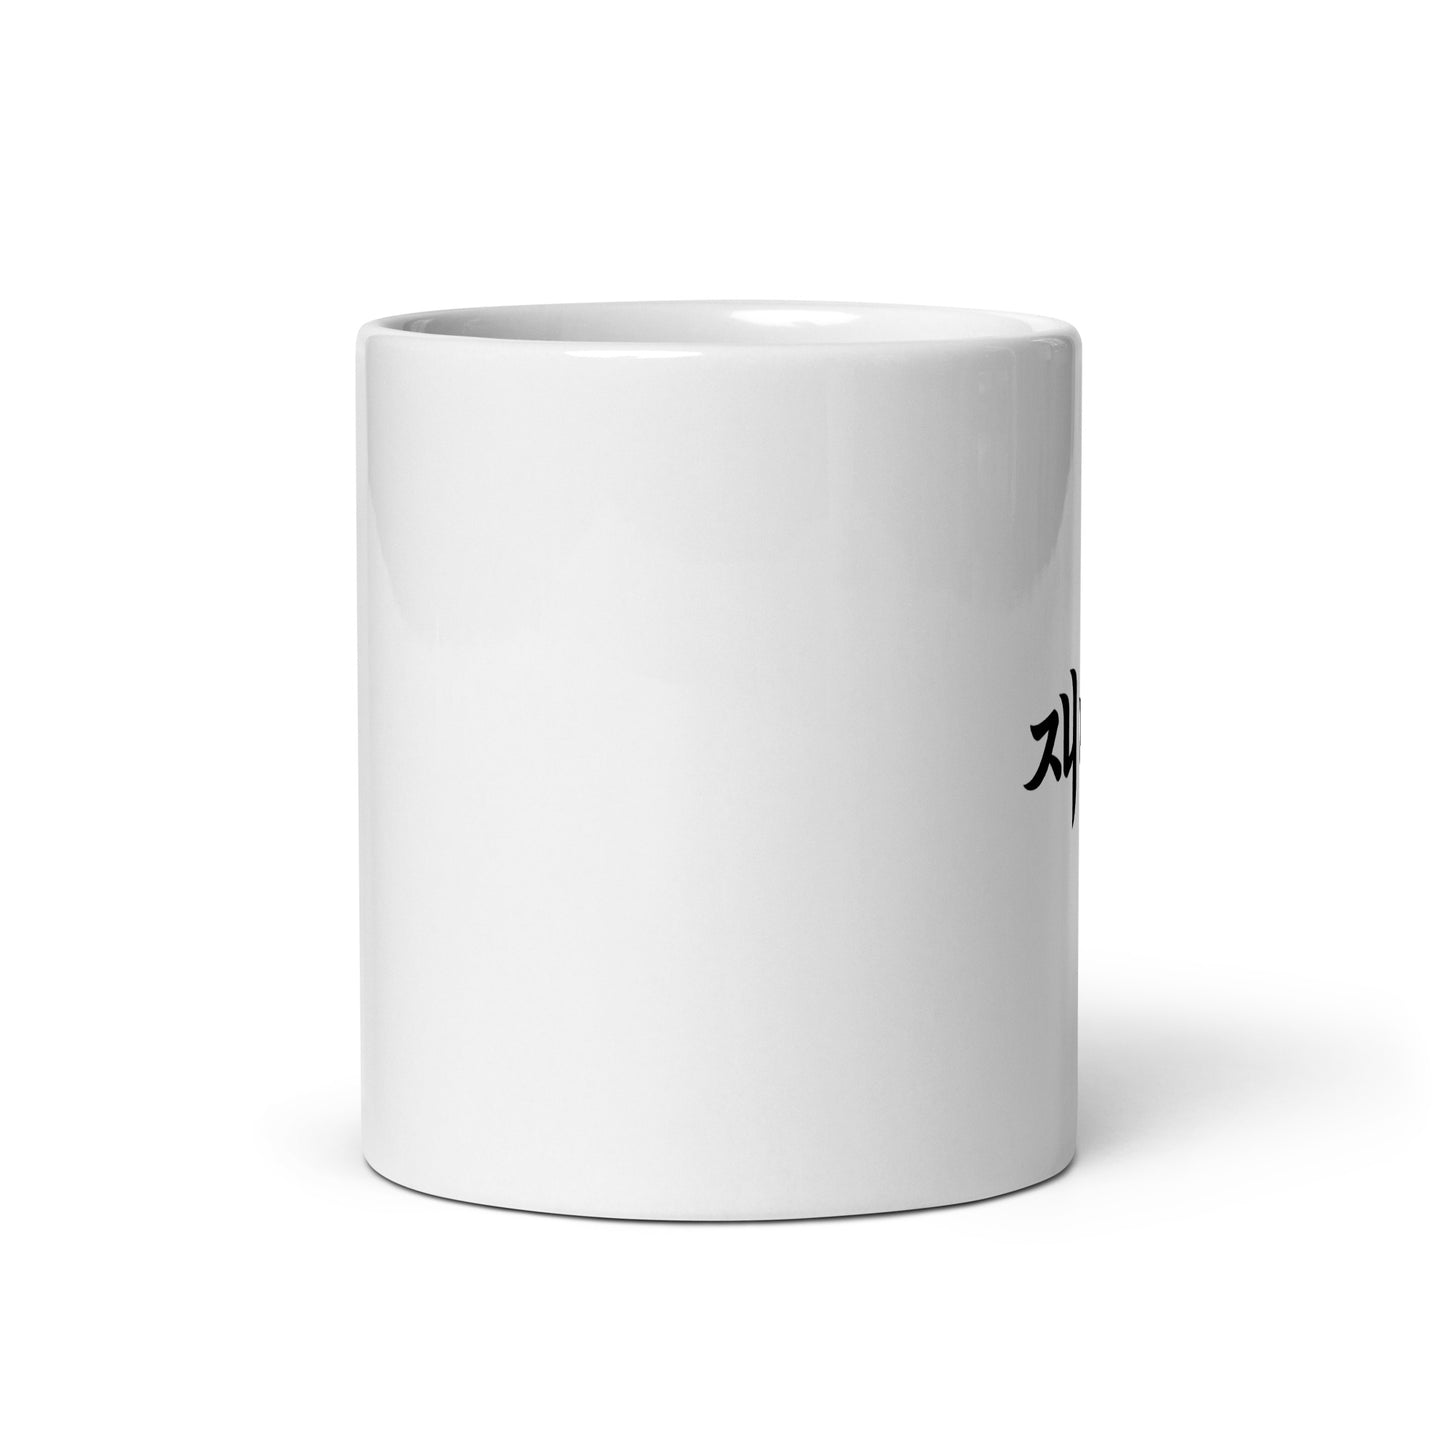 Janice in Hangul Custom Name Gift Ceramic Mug